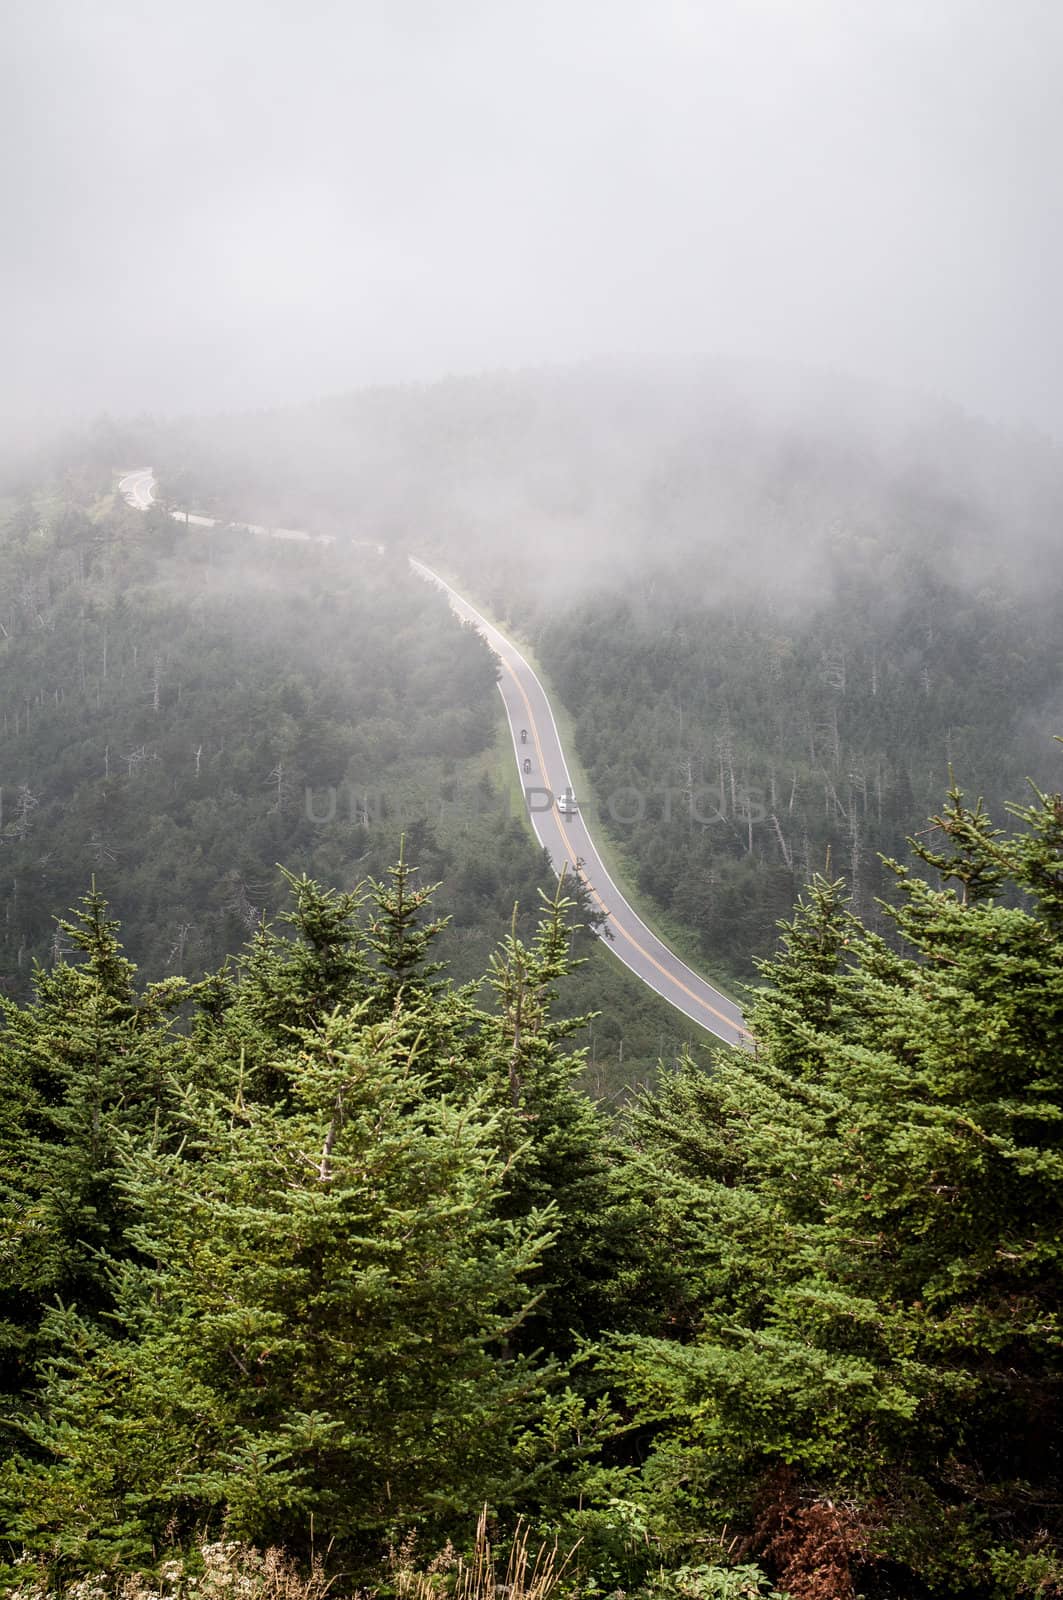 road curve through mountain